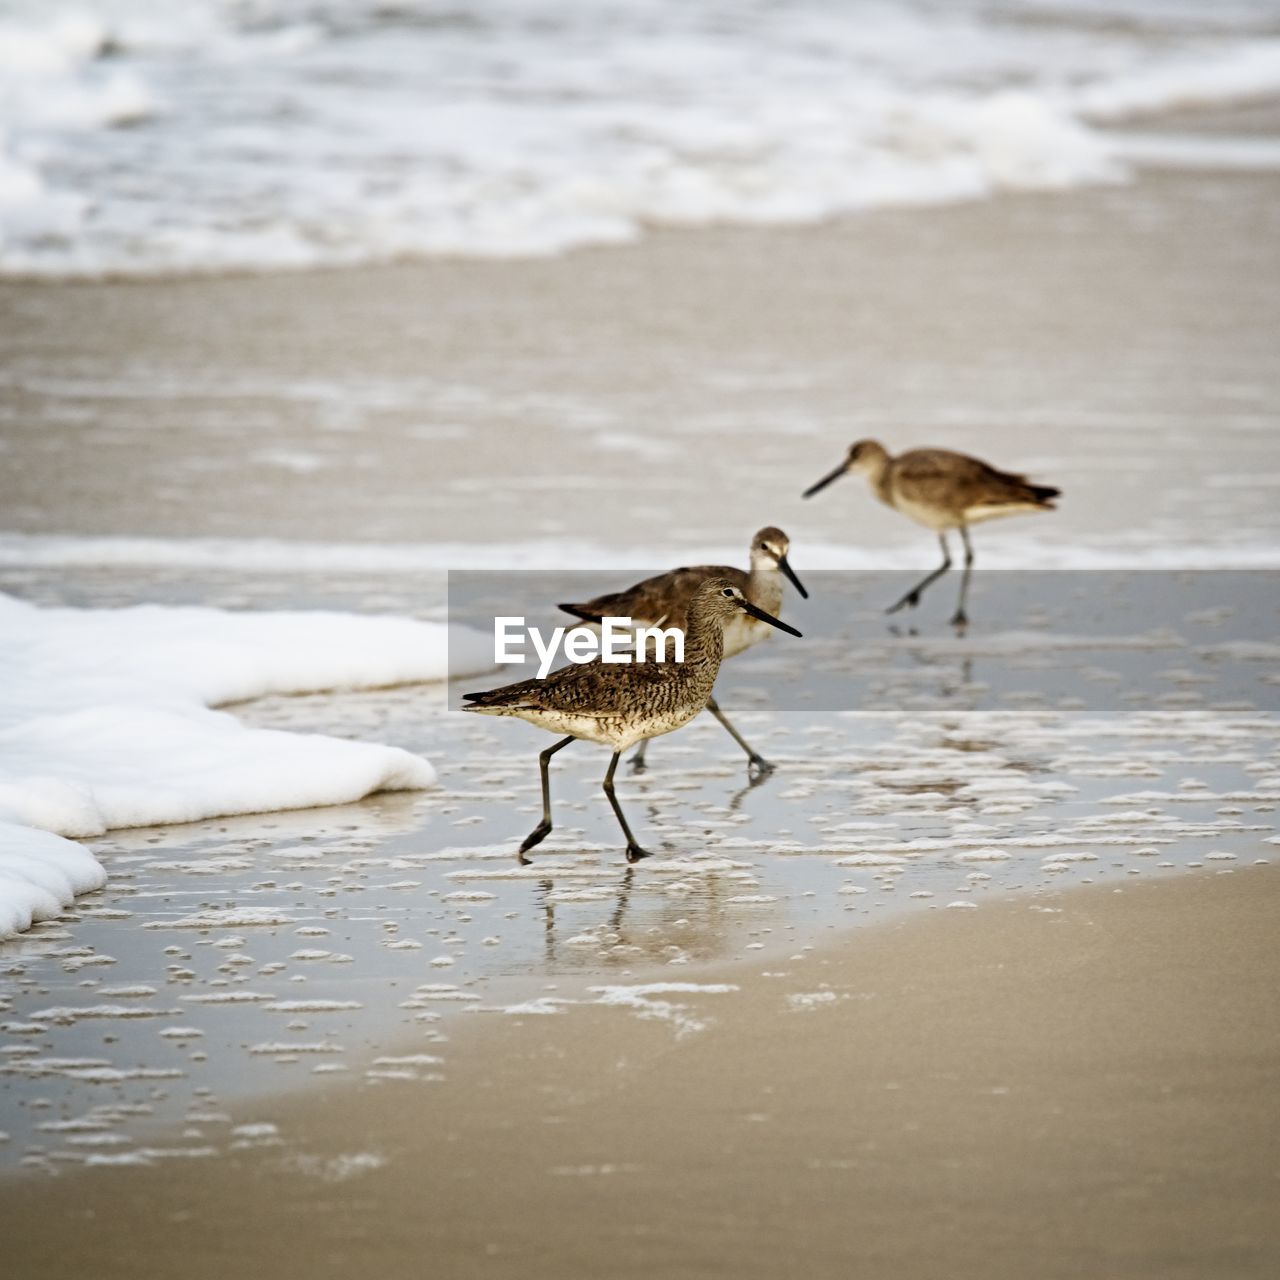 Shorebirds looking for food